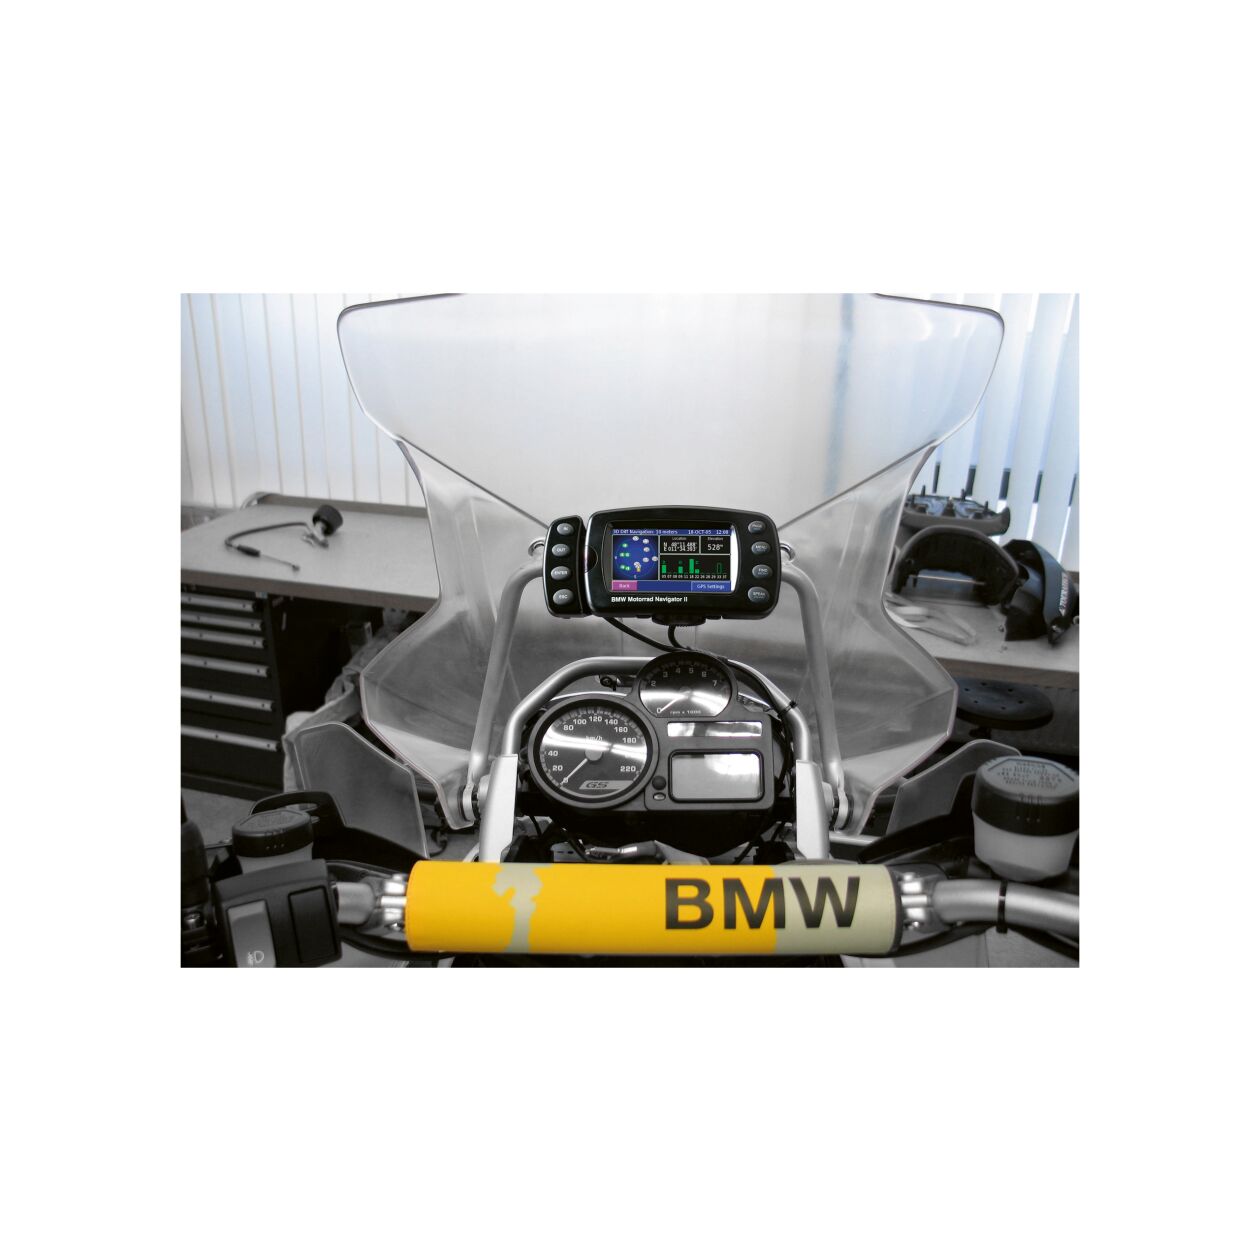 BMW Bracket for Bmw Motorrad Navigator (71607713903)